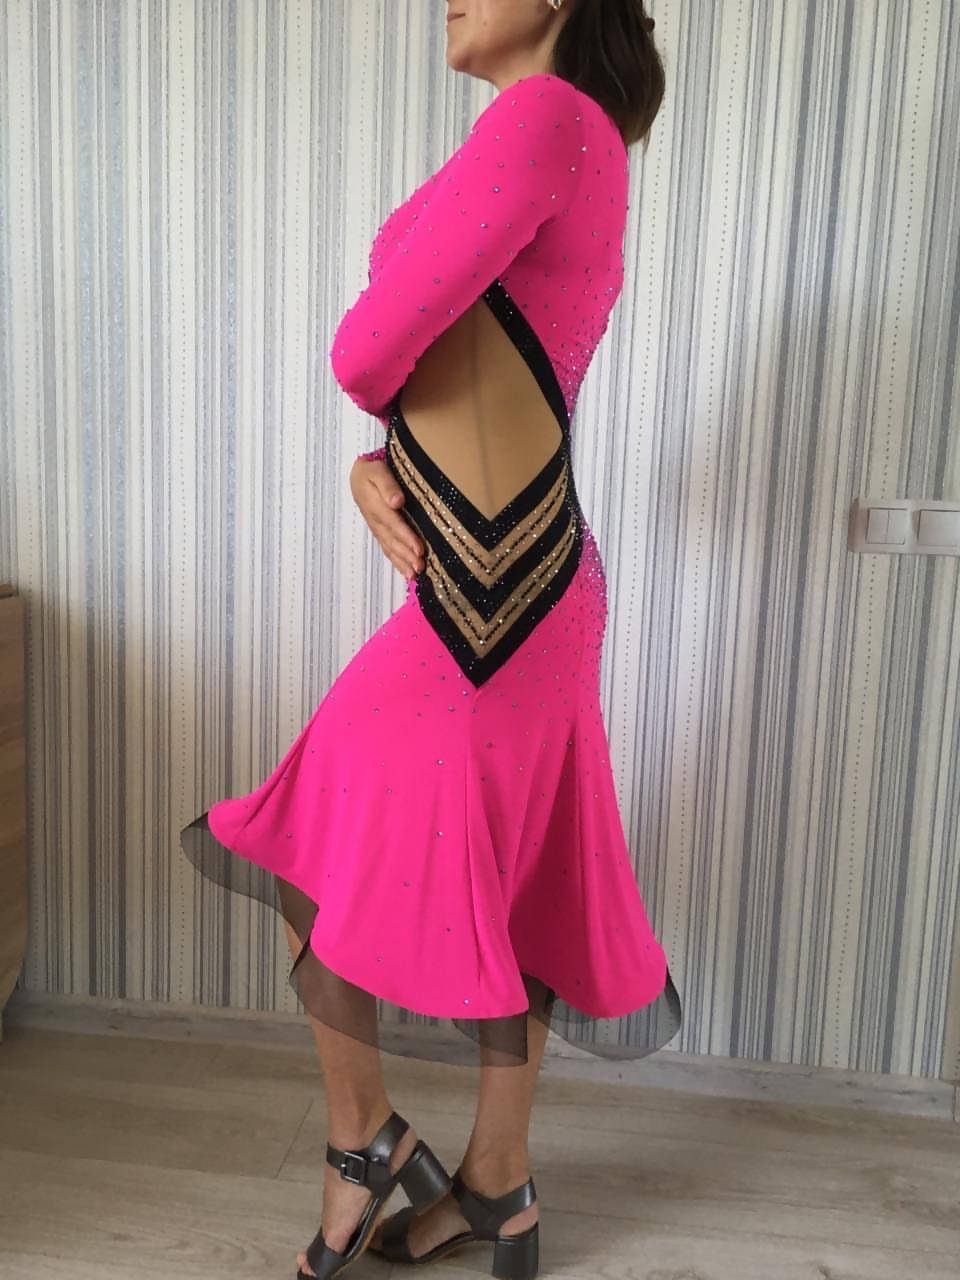 New Pink Silhouette Latin Dress